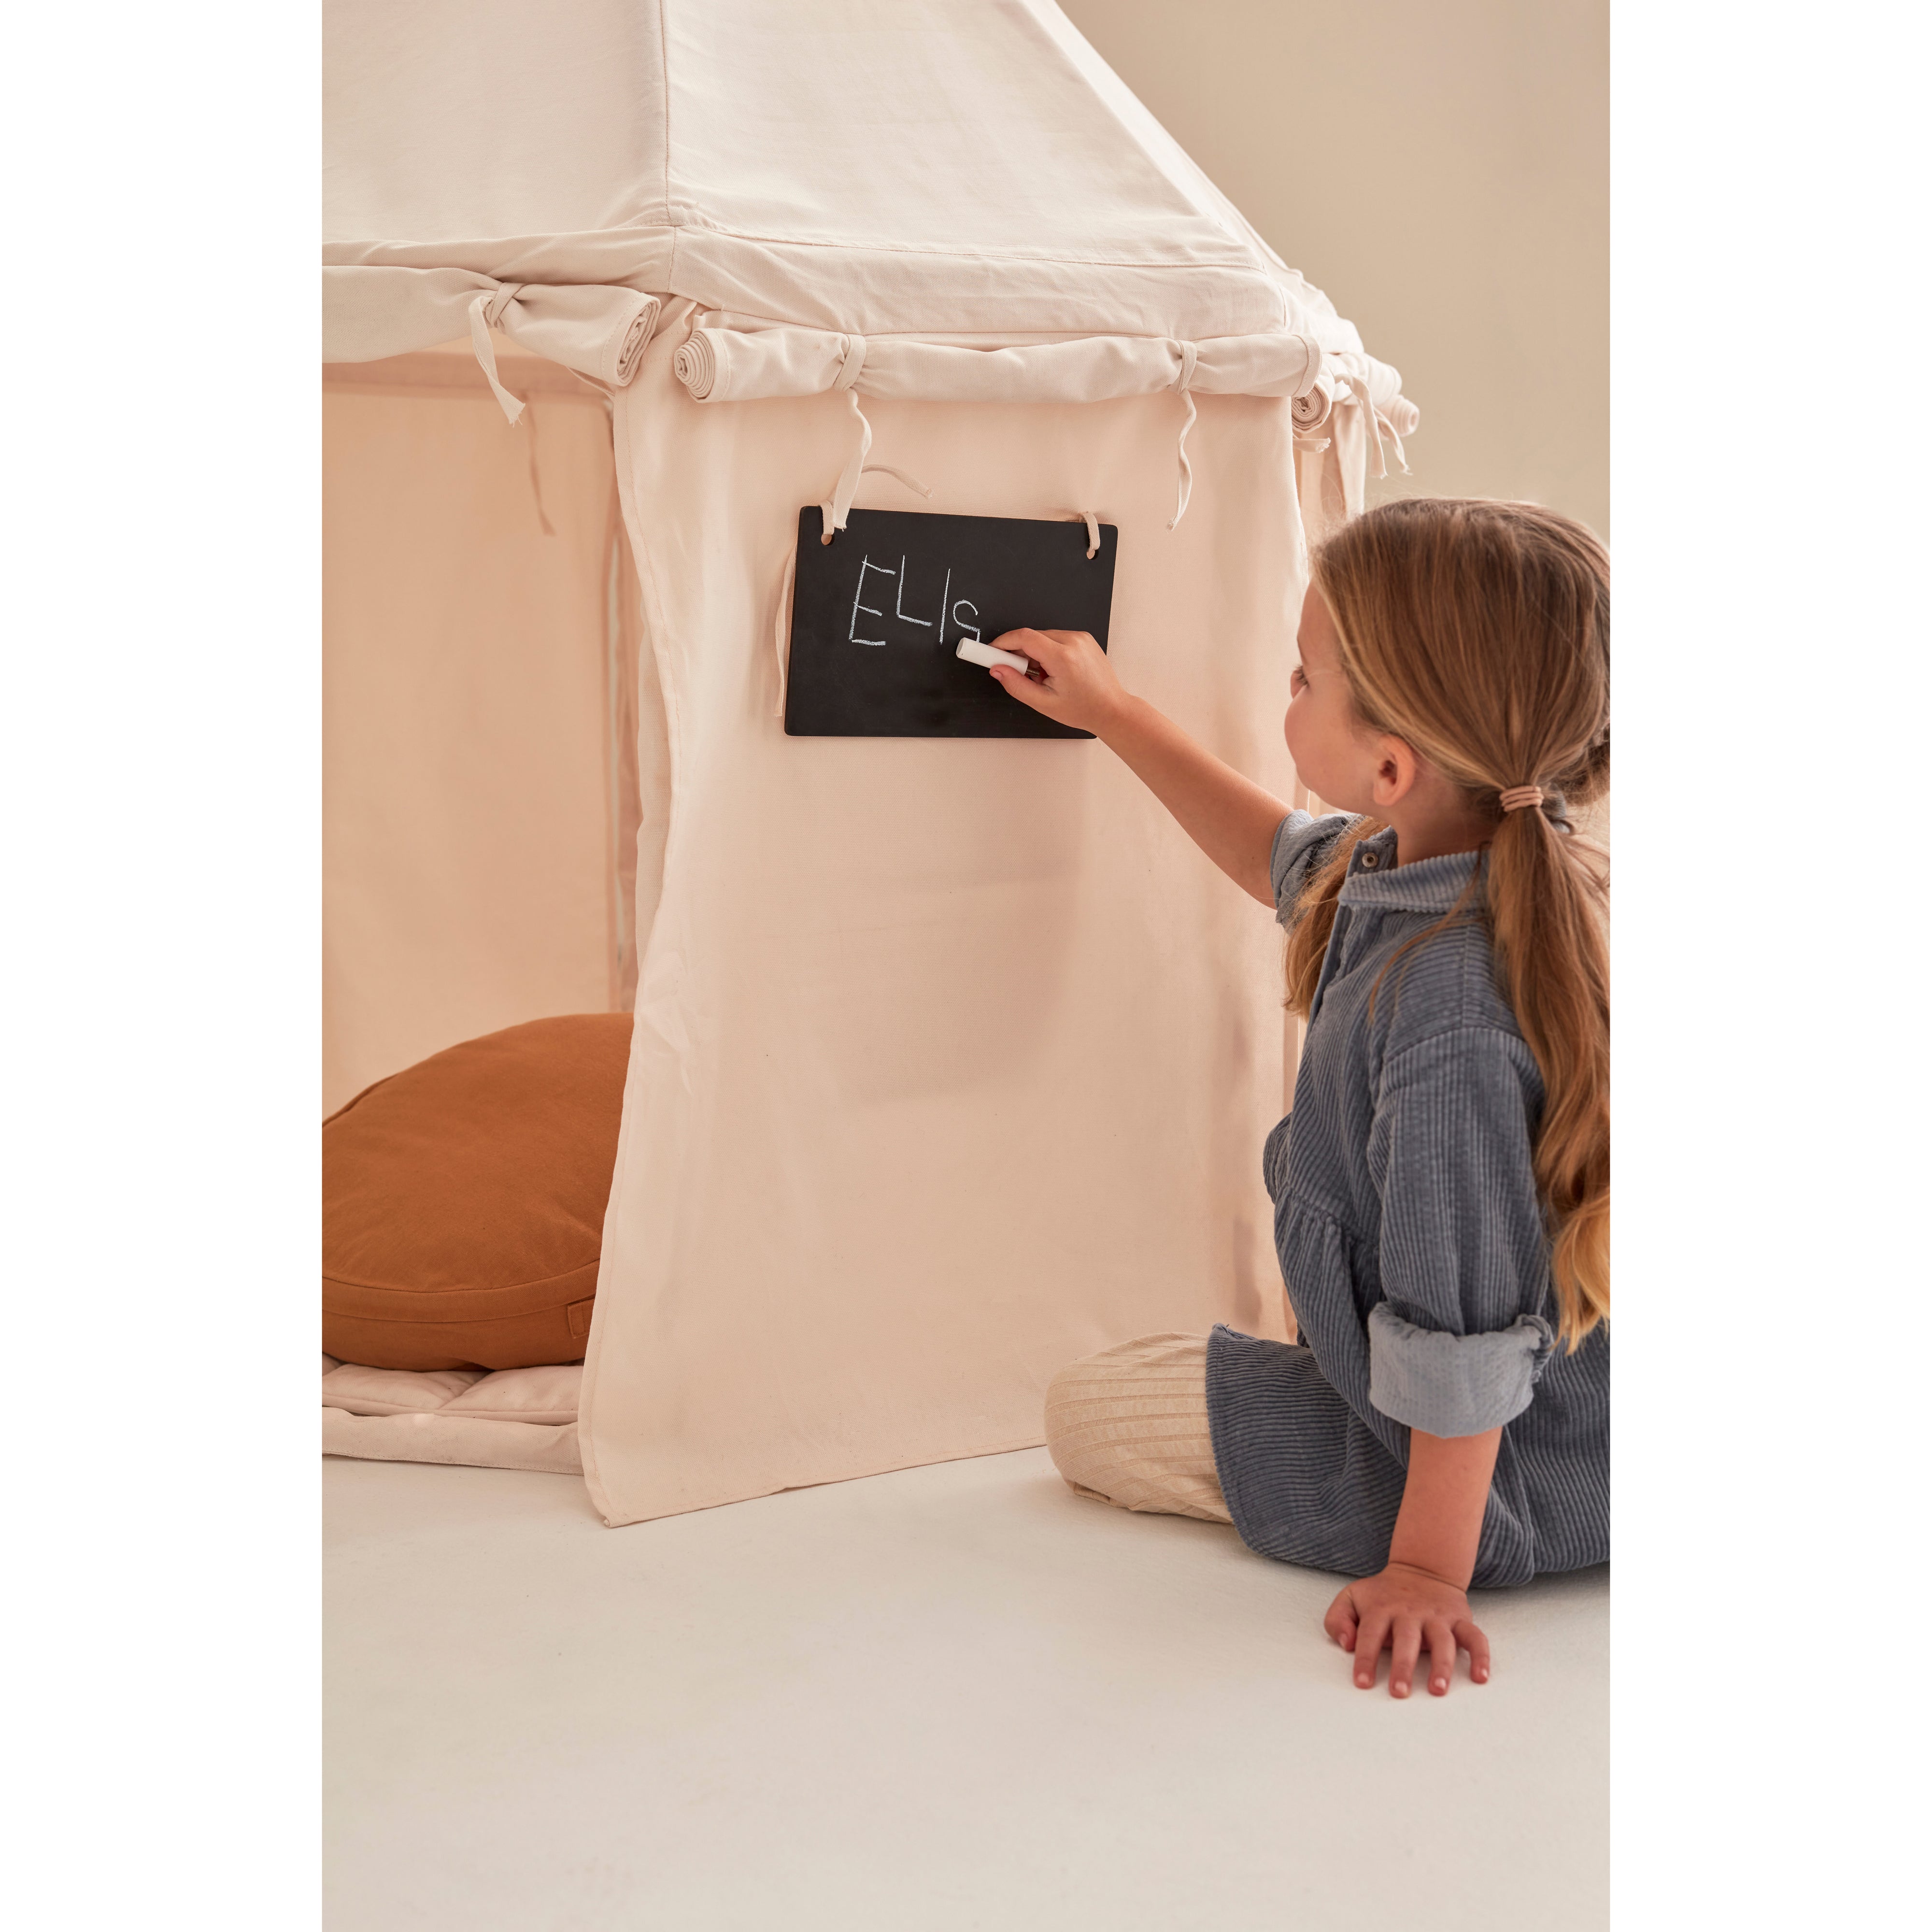 kids-concept-tent-add-on-play-set-kids-hub-kidc-1000643- (7)